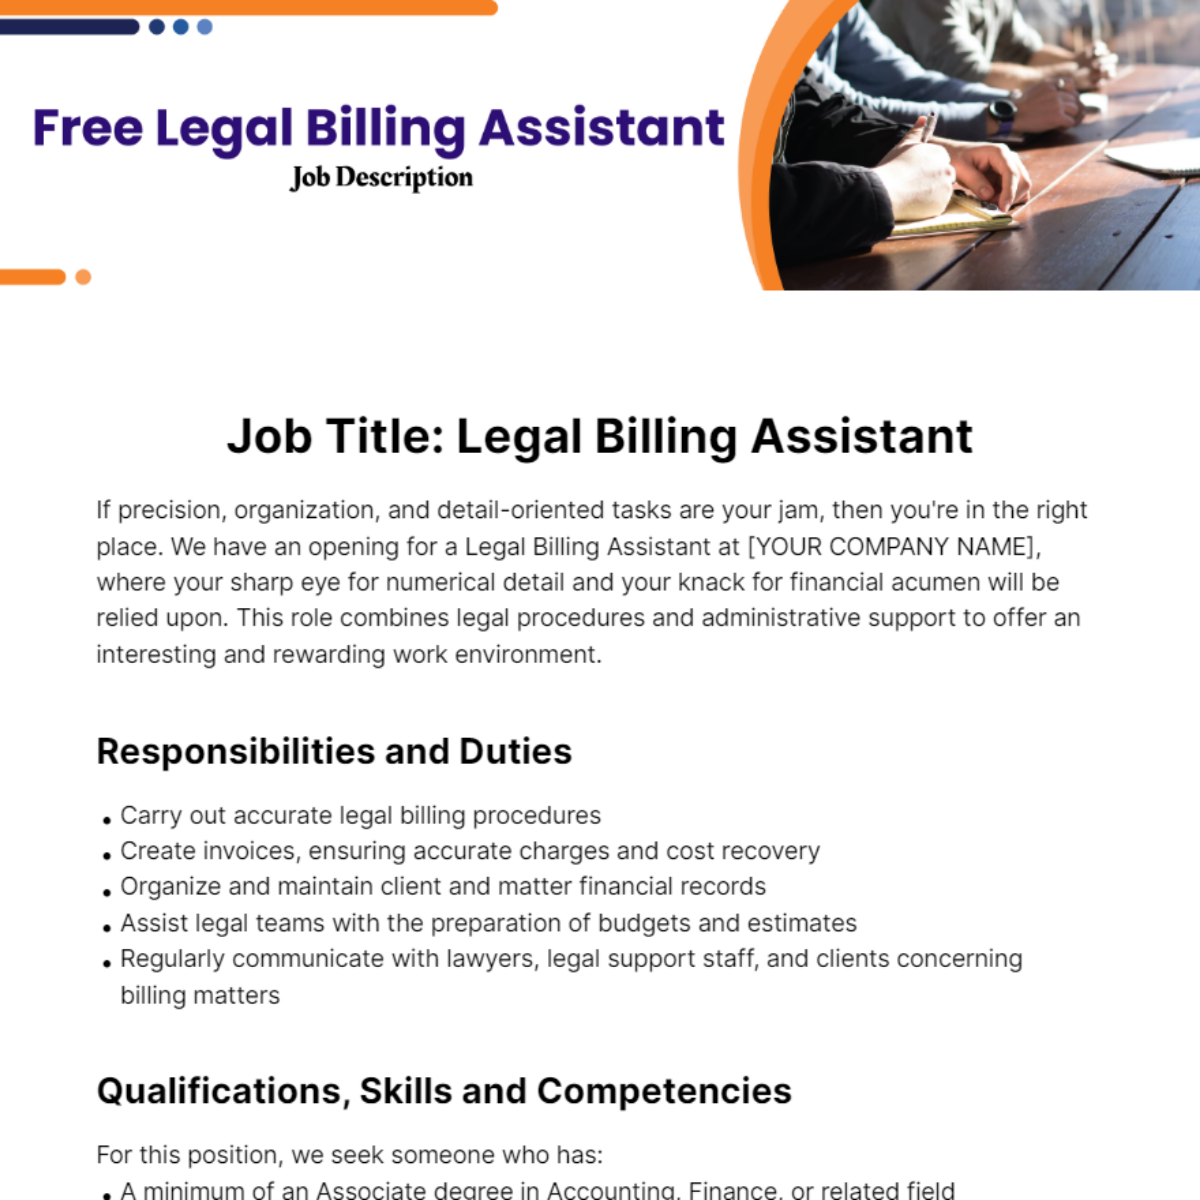 Free Legal Billing Assistant Job Description Template